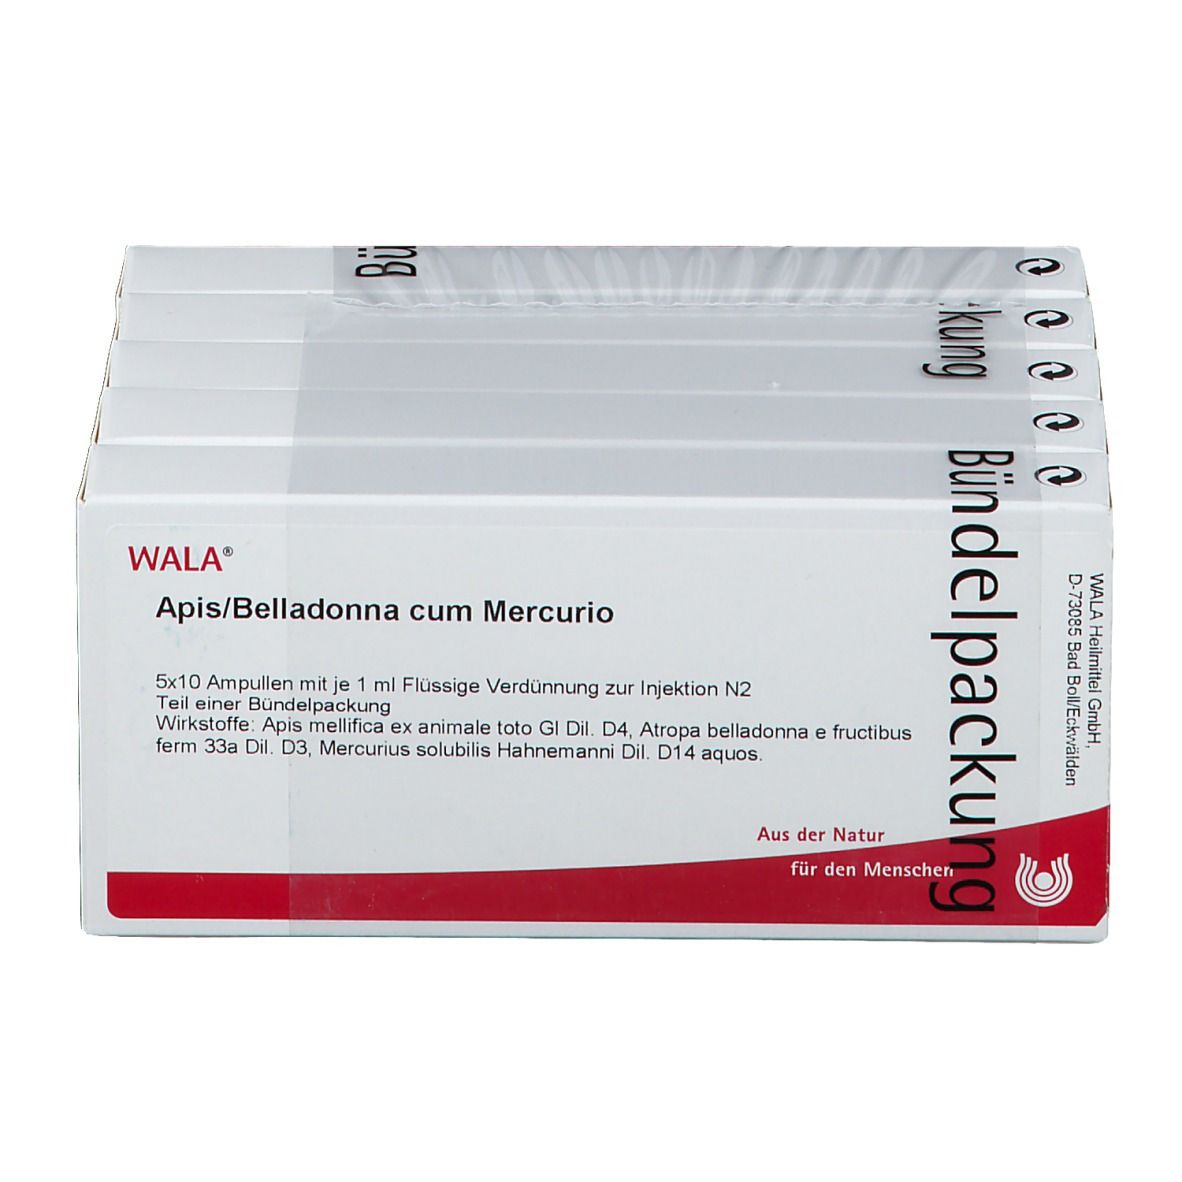 WALA® Apis Belladonna c. Mercurio Ampullen